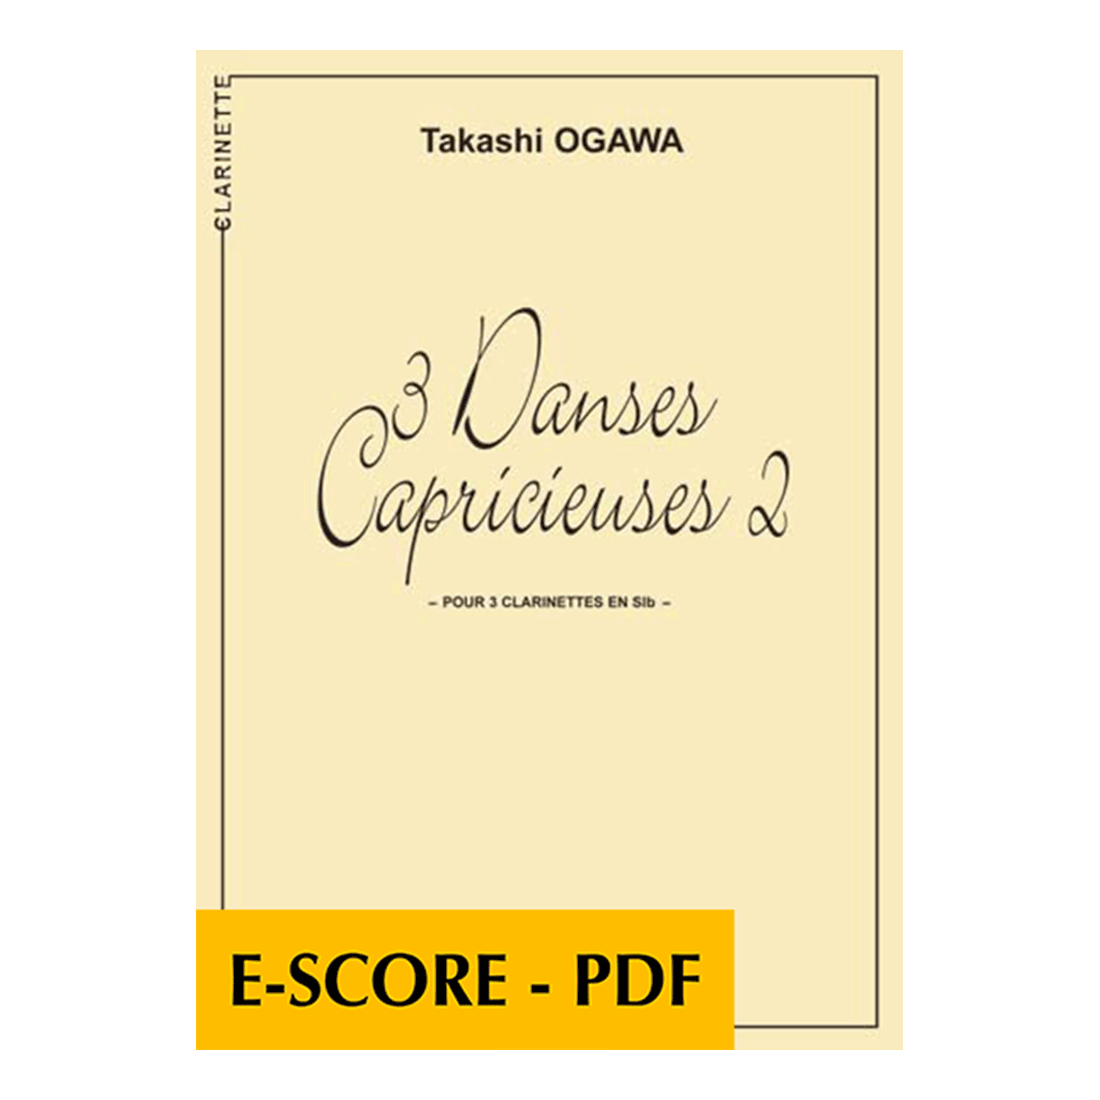 3 danses capricieuses II für 3 Klarinetten - E-score PDF